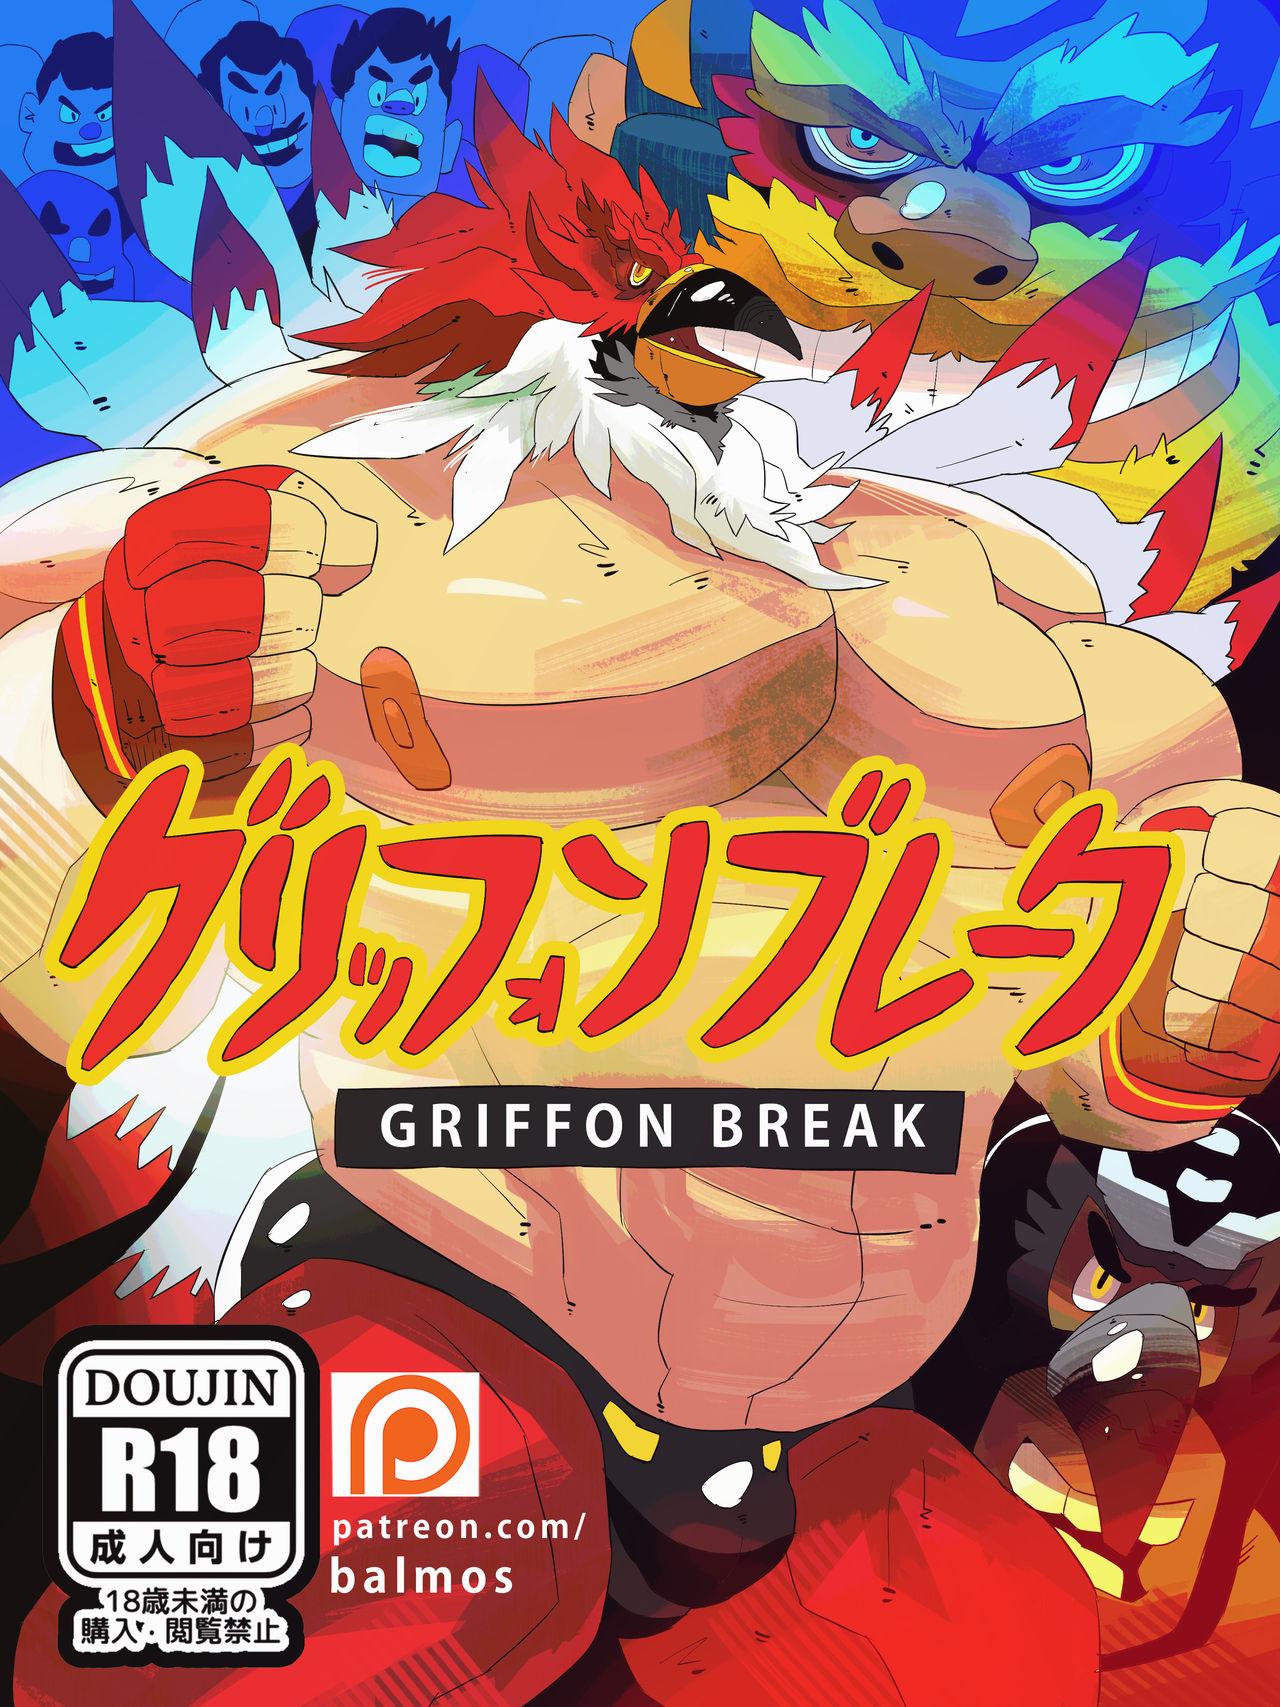 Gaydudes Griffon Break HD - King of fighters Fatal fury | garou densetsu Publico - Picture 1